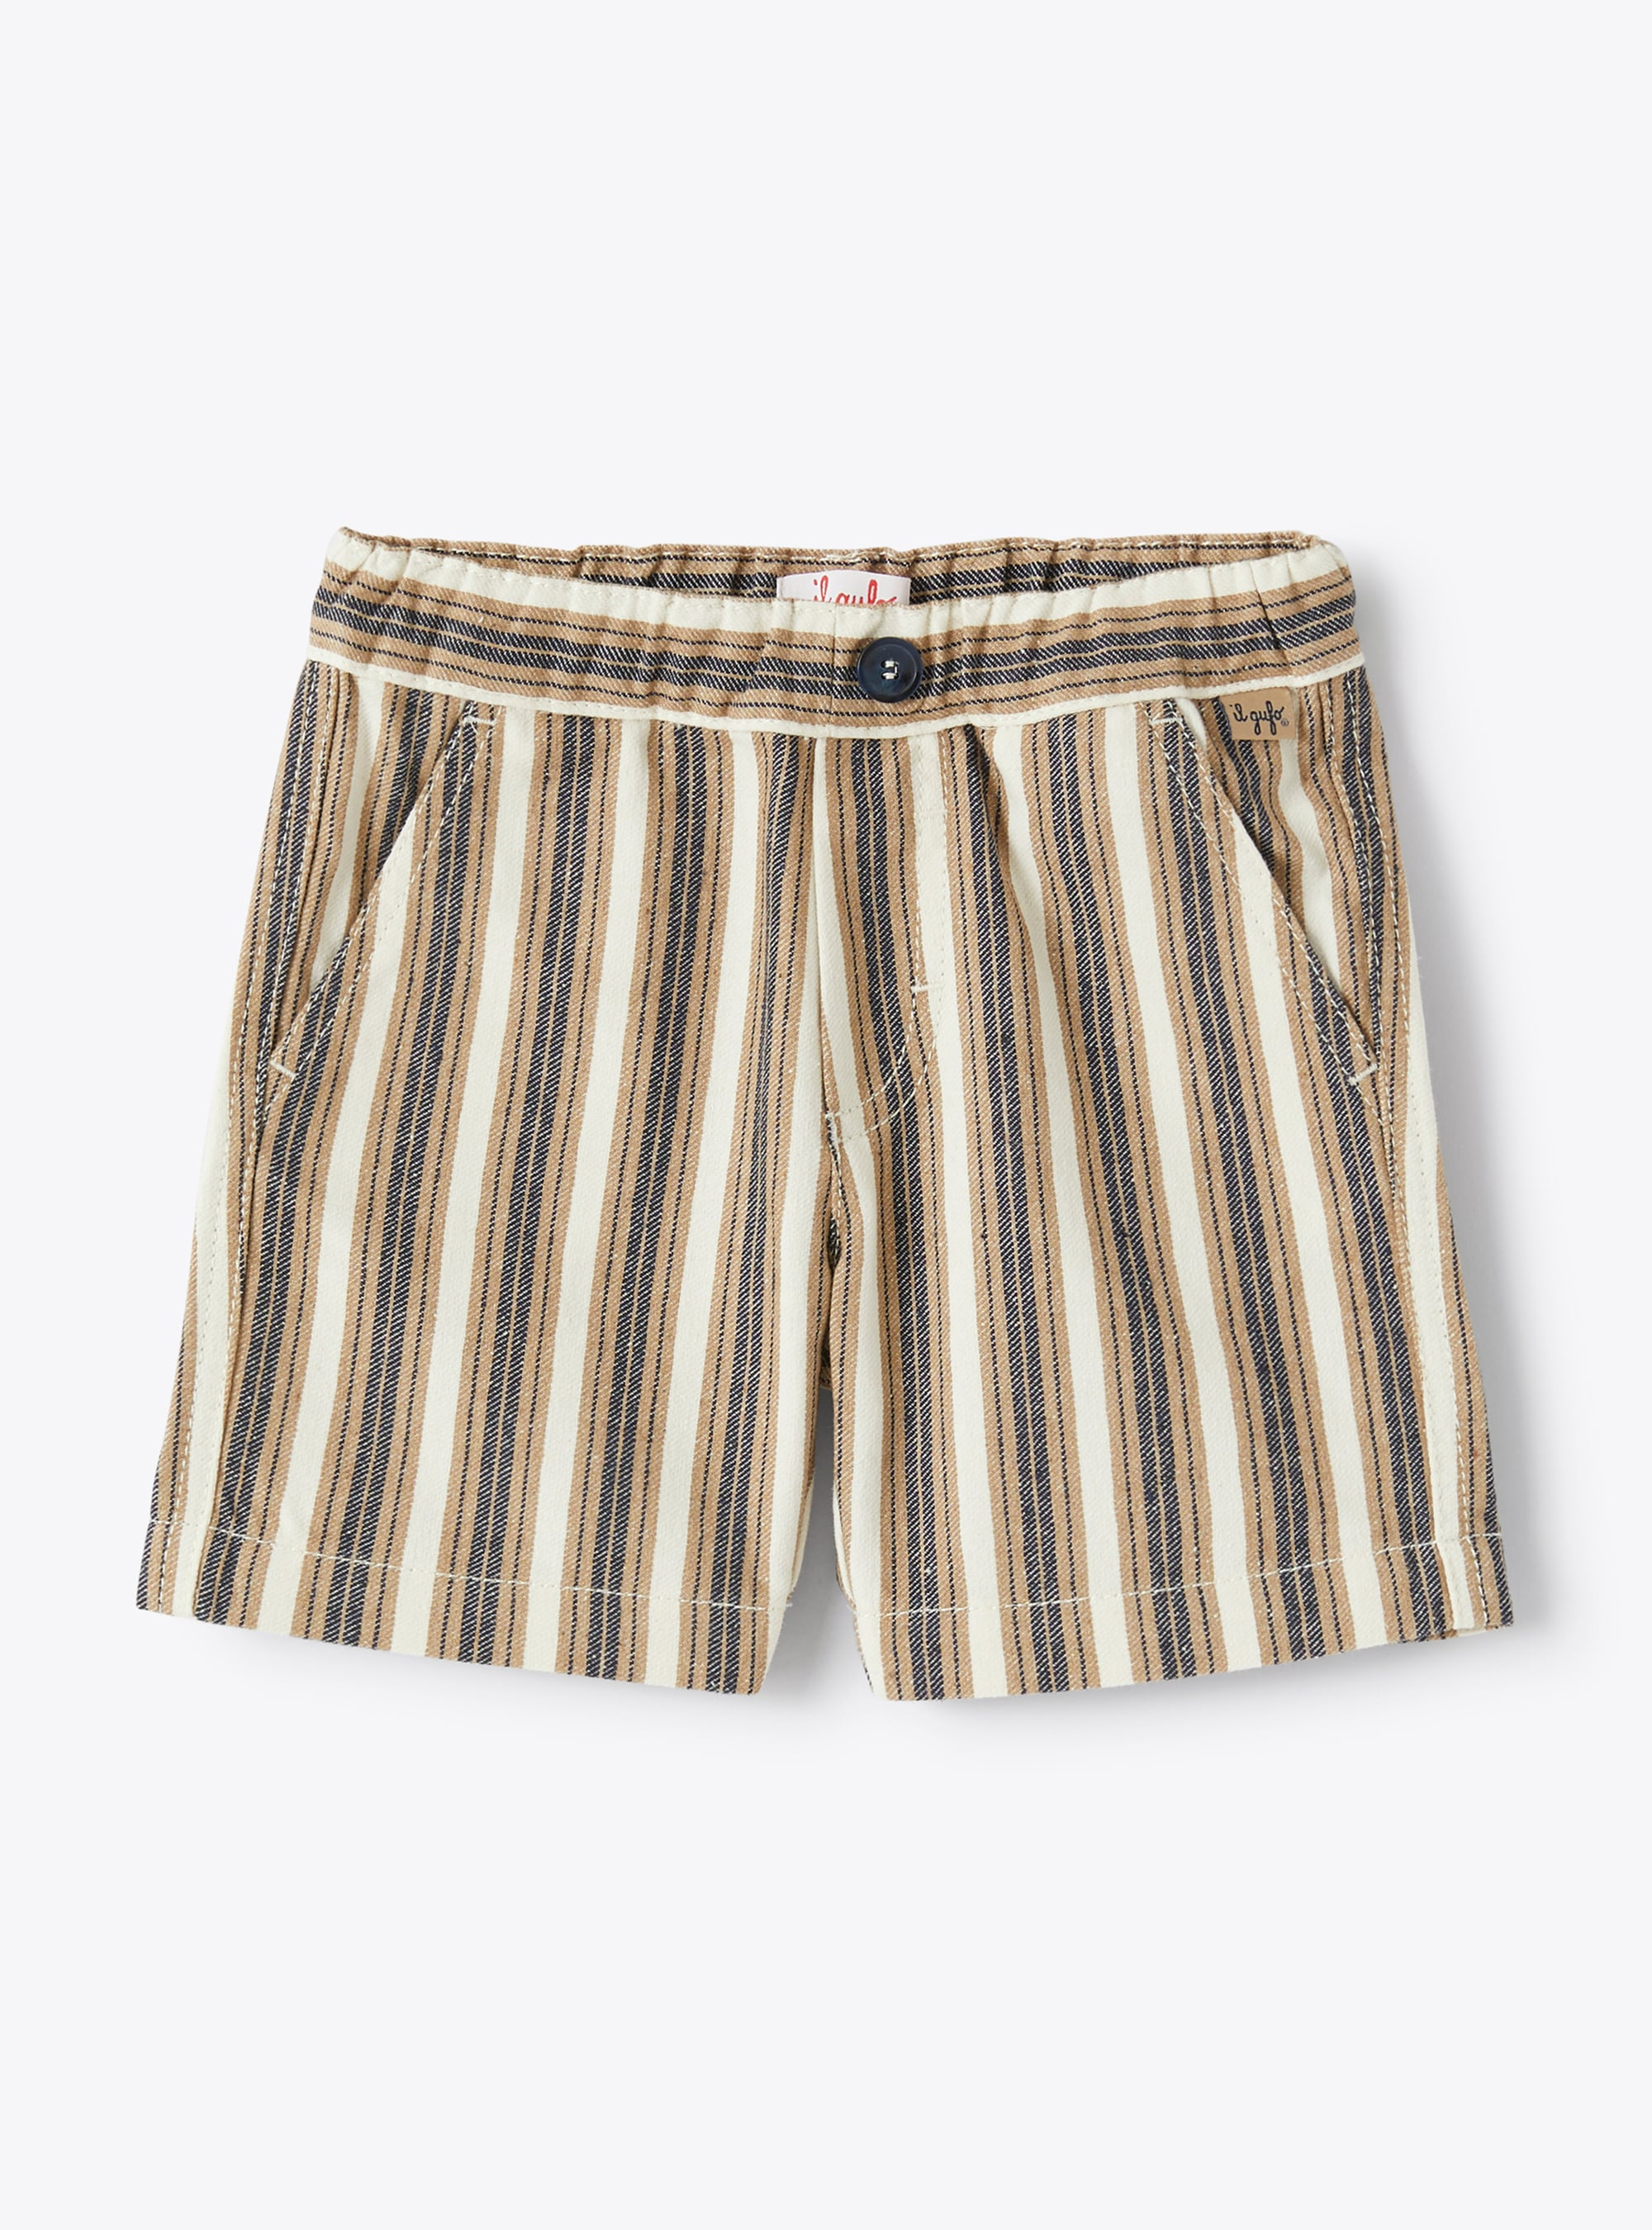 Bermuda shorts in blue-and-beige stripes - Trousers - Il Gufo